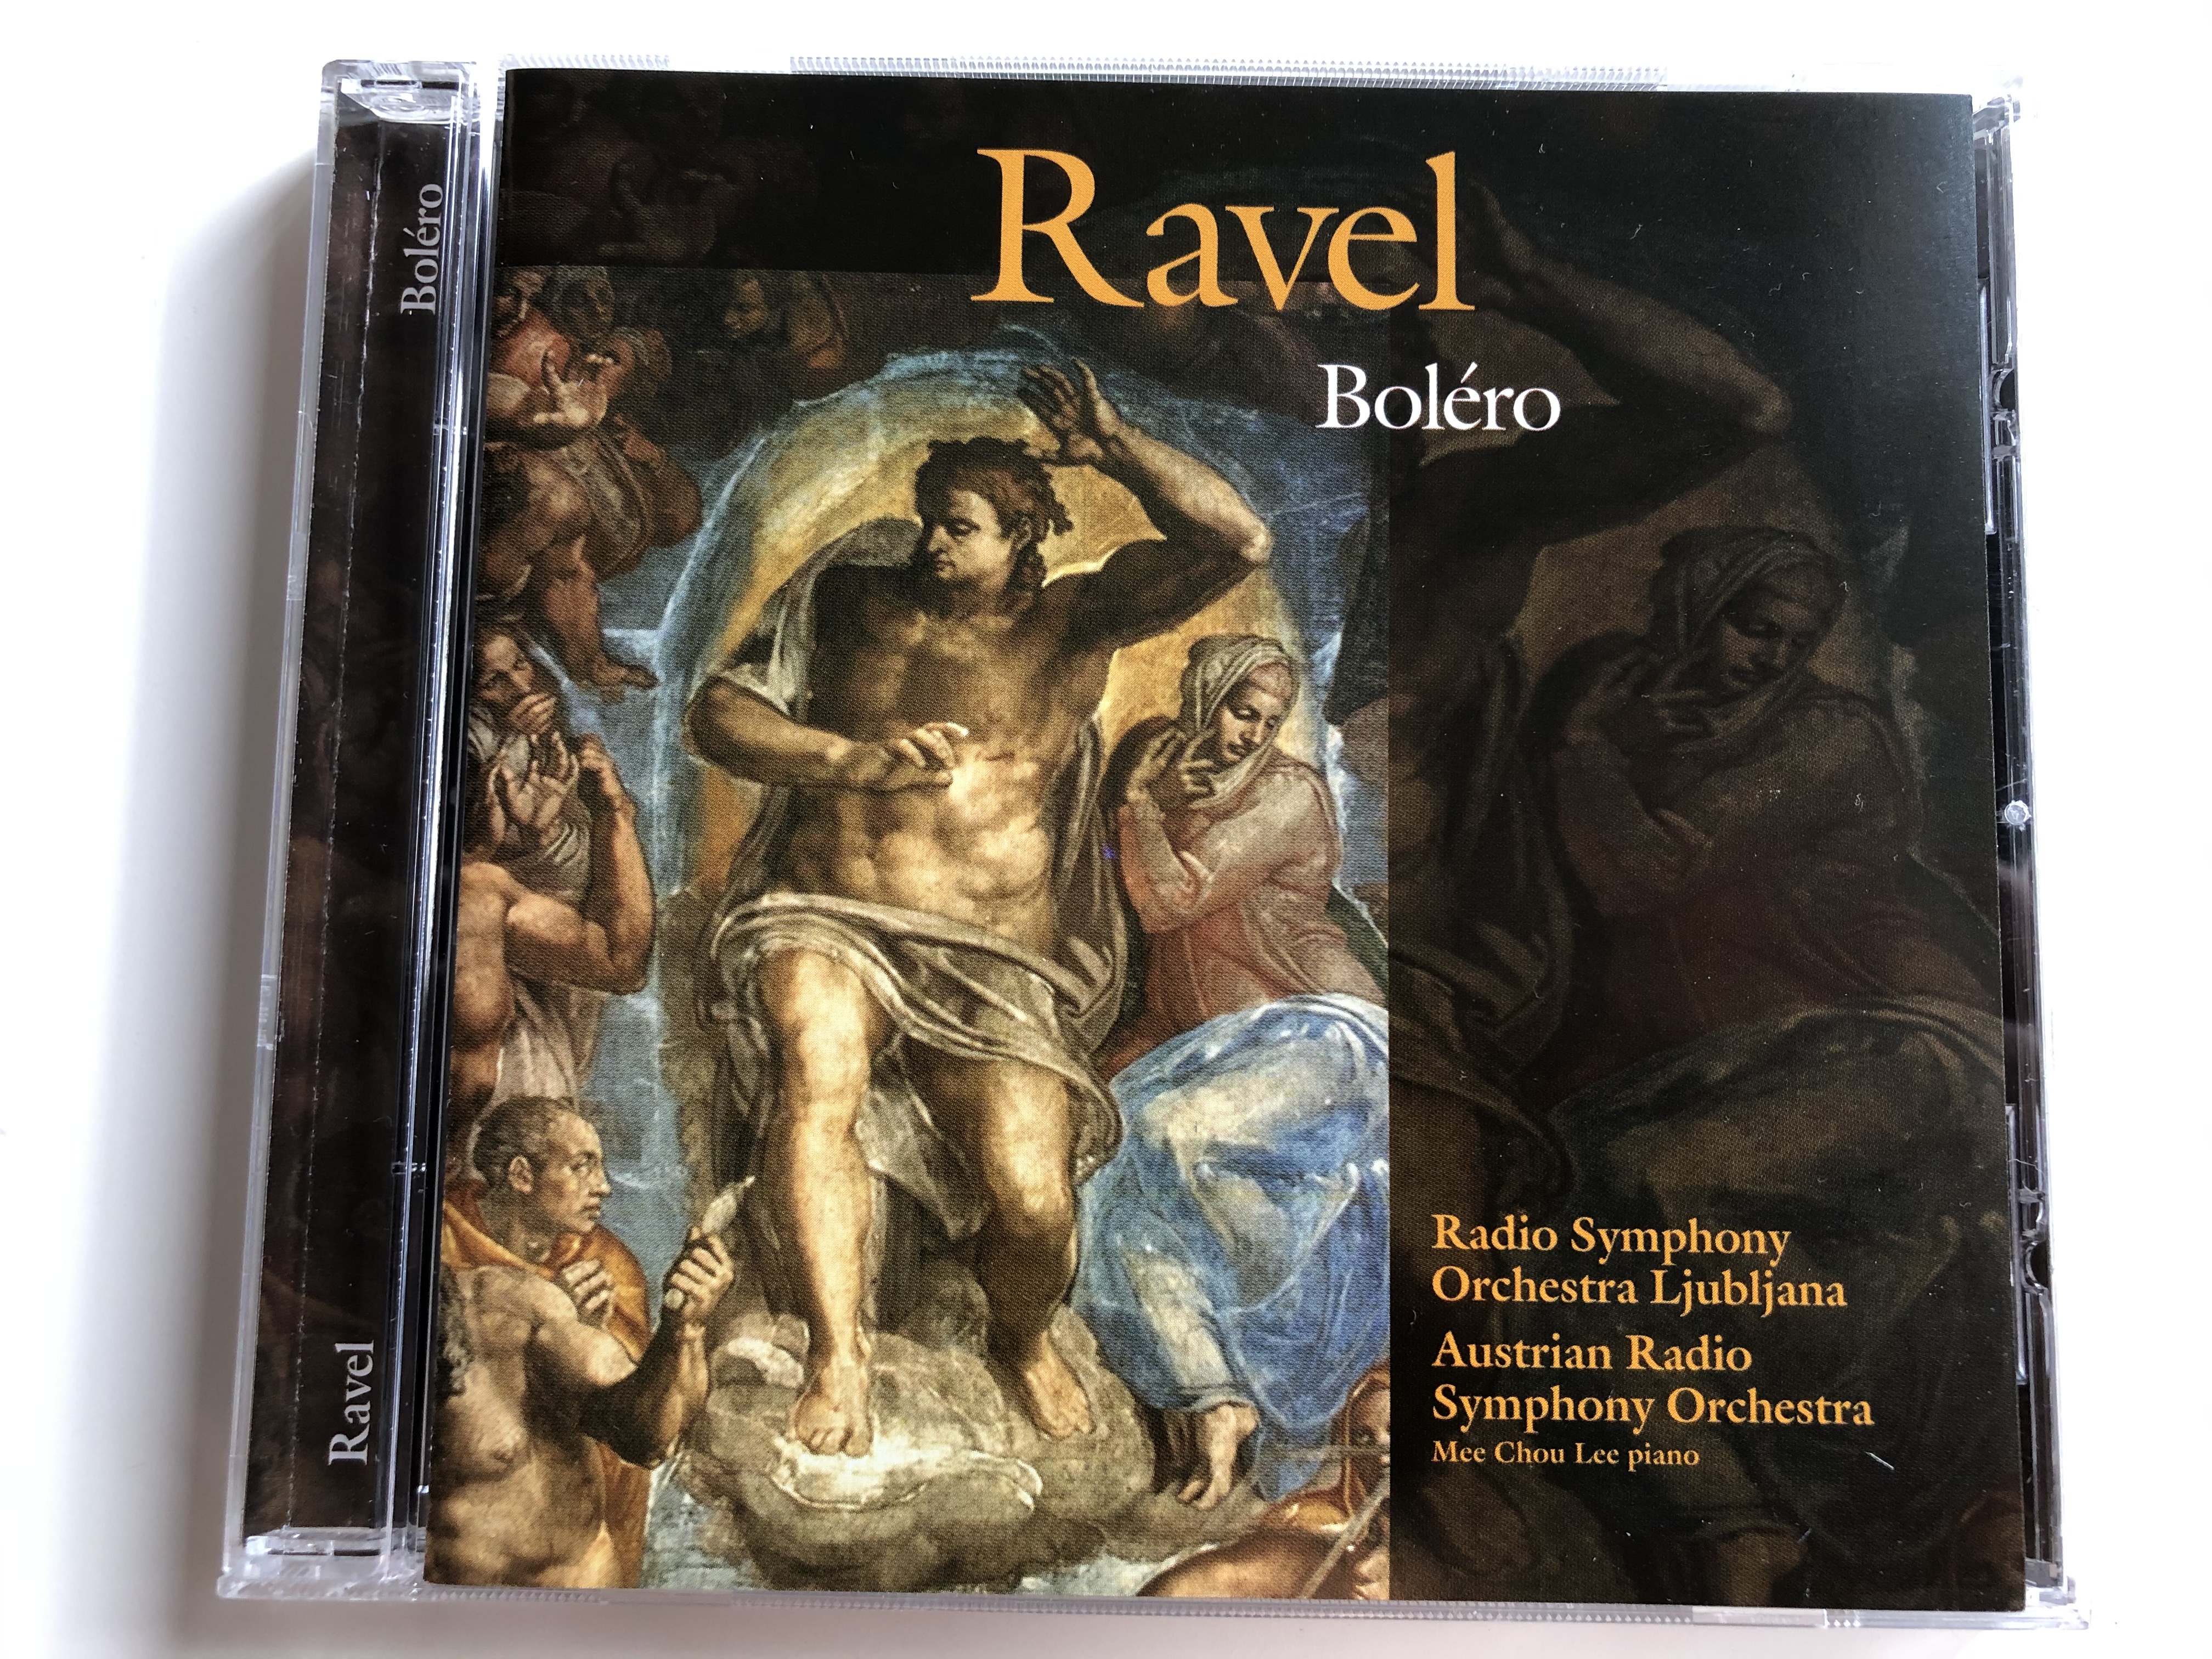 ravel-bol-ro-radio-symphony-orchestra-ljubljana-austrian-radio-symphony-orchestra-piano-mee-chou-lee-cmc-home-entertainment-audio-cd-1996-9007-2-1-.jpg